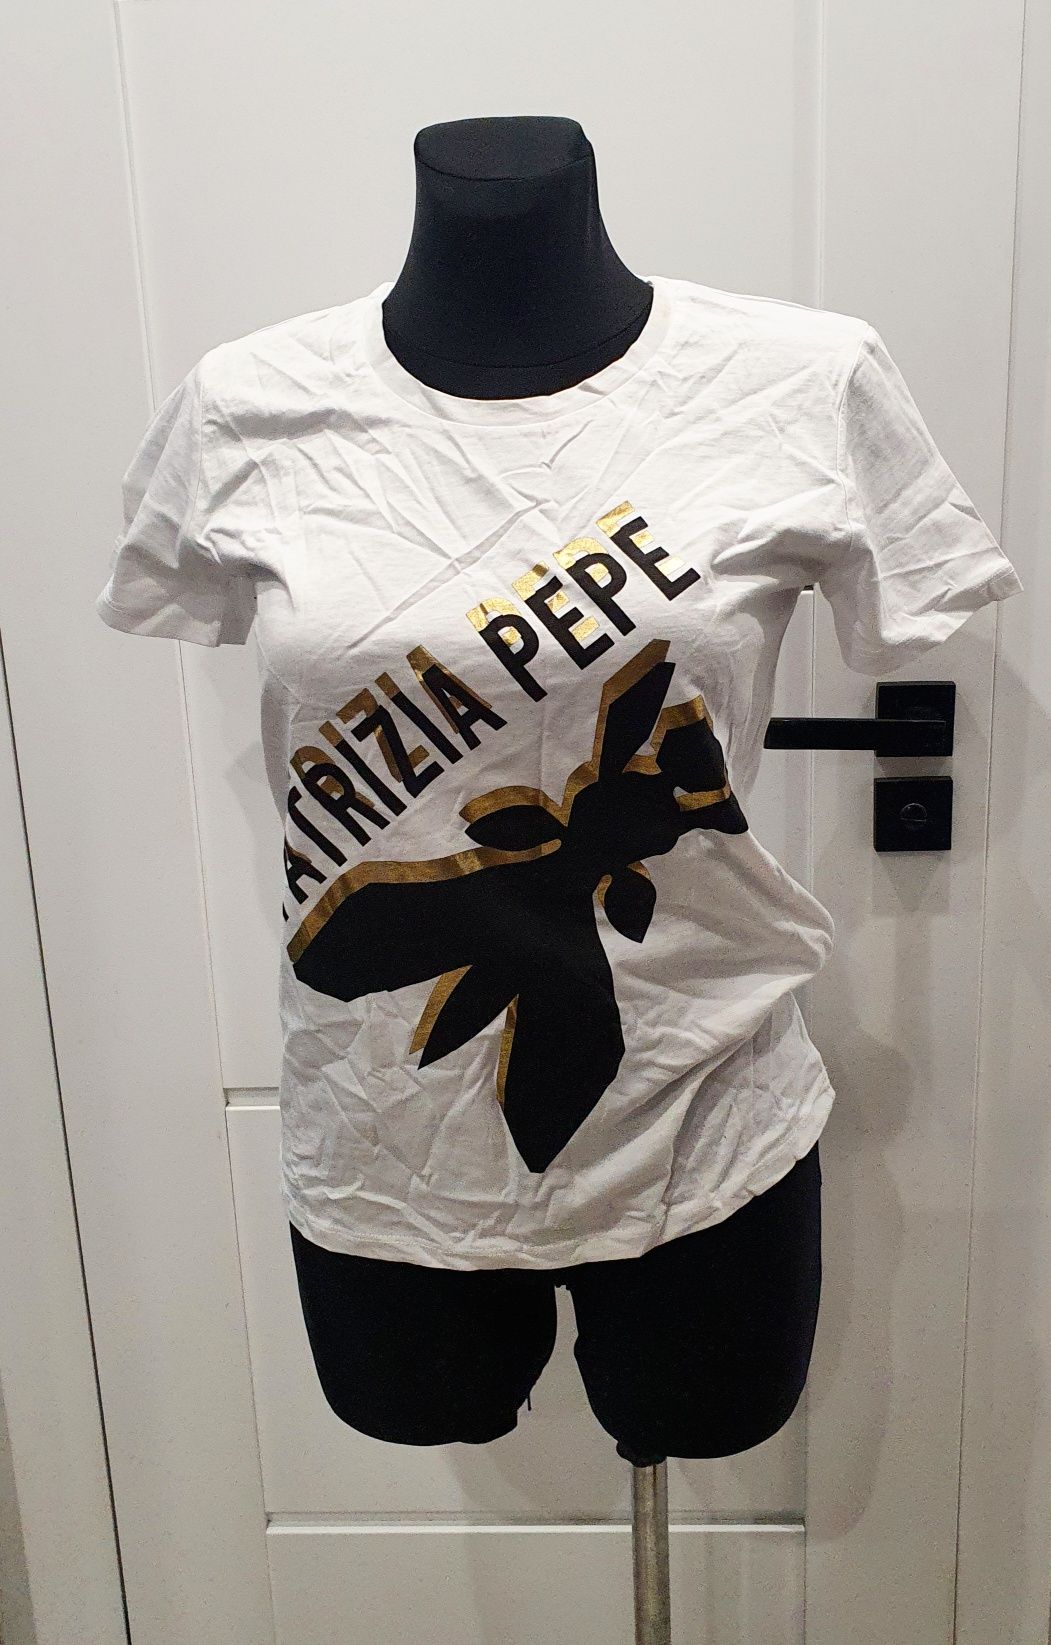 T-shirt Patrizia Pepe